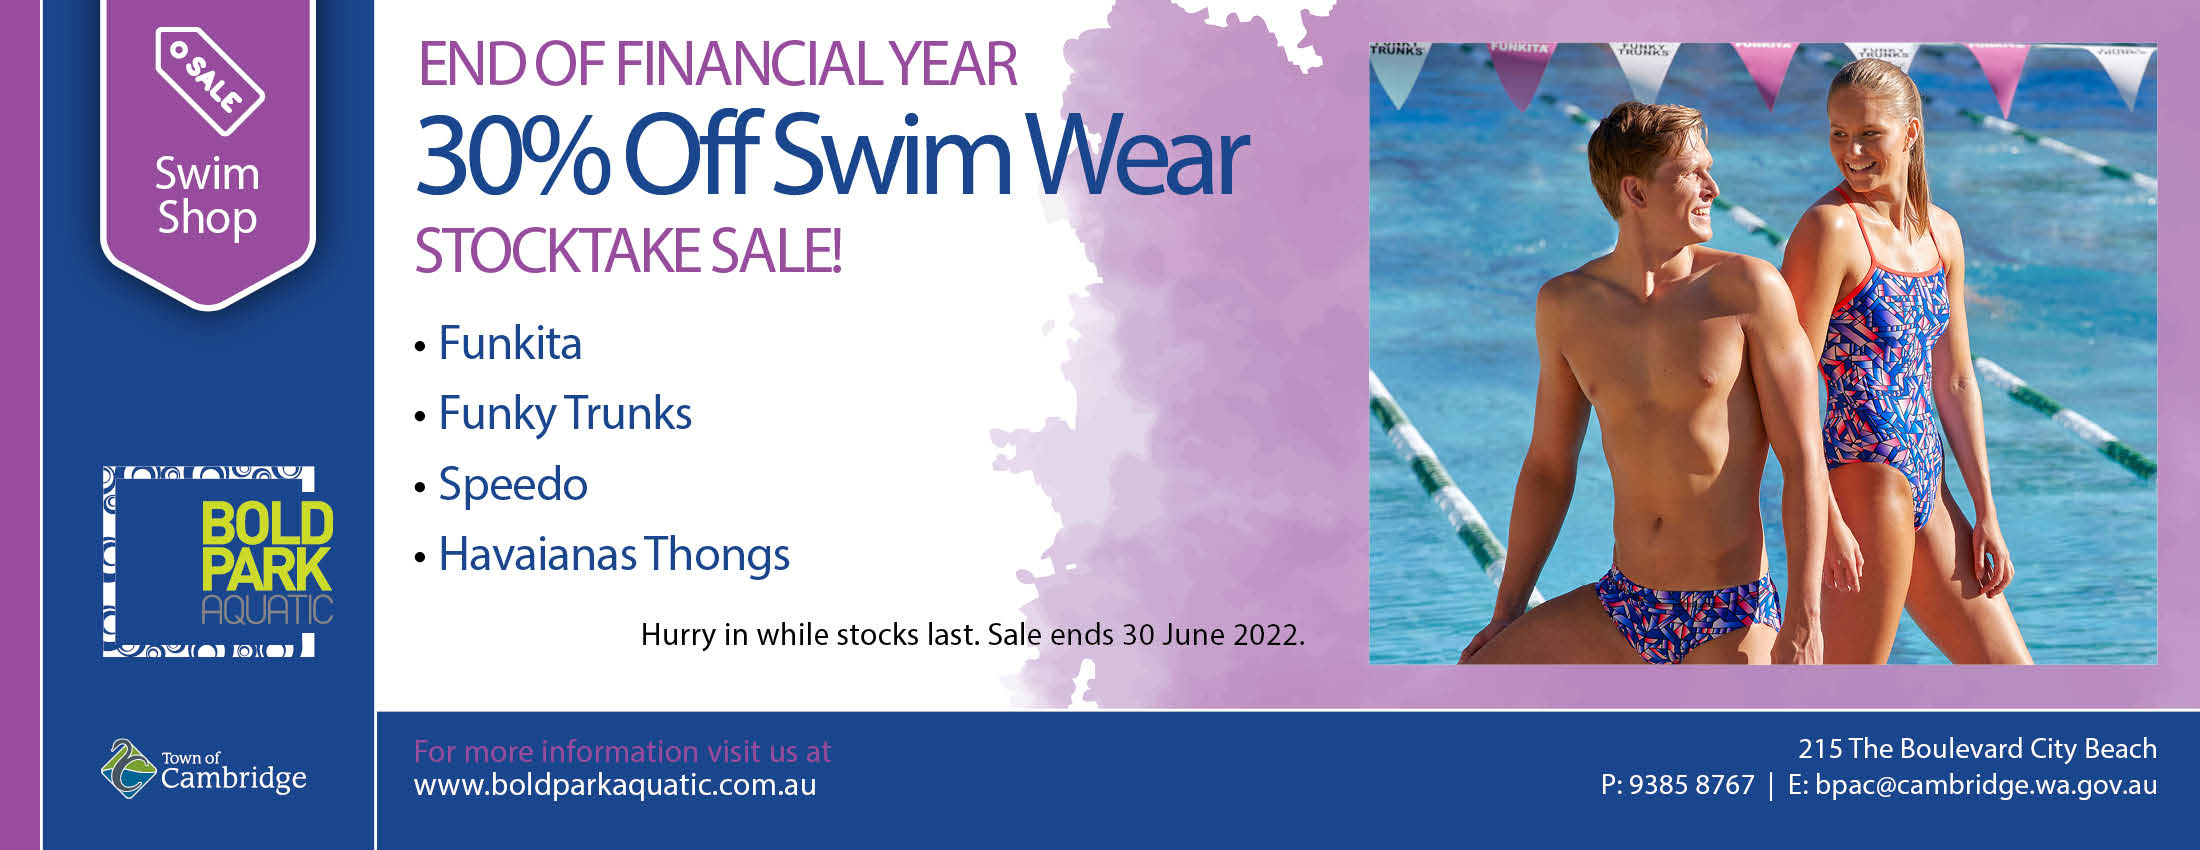 EOFY-Swim-Shop-Sale-Website-Banner.jpg